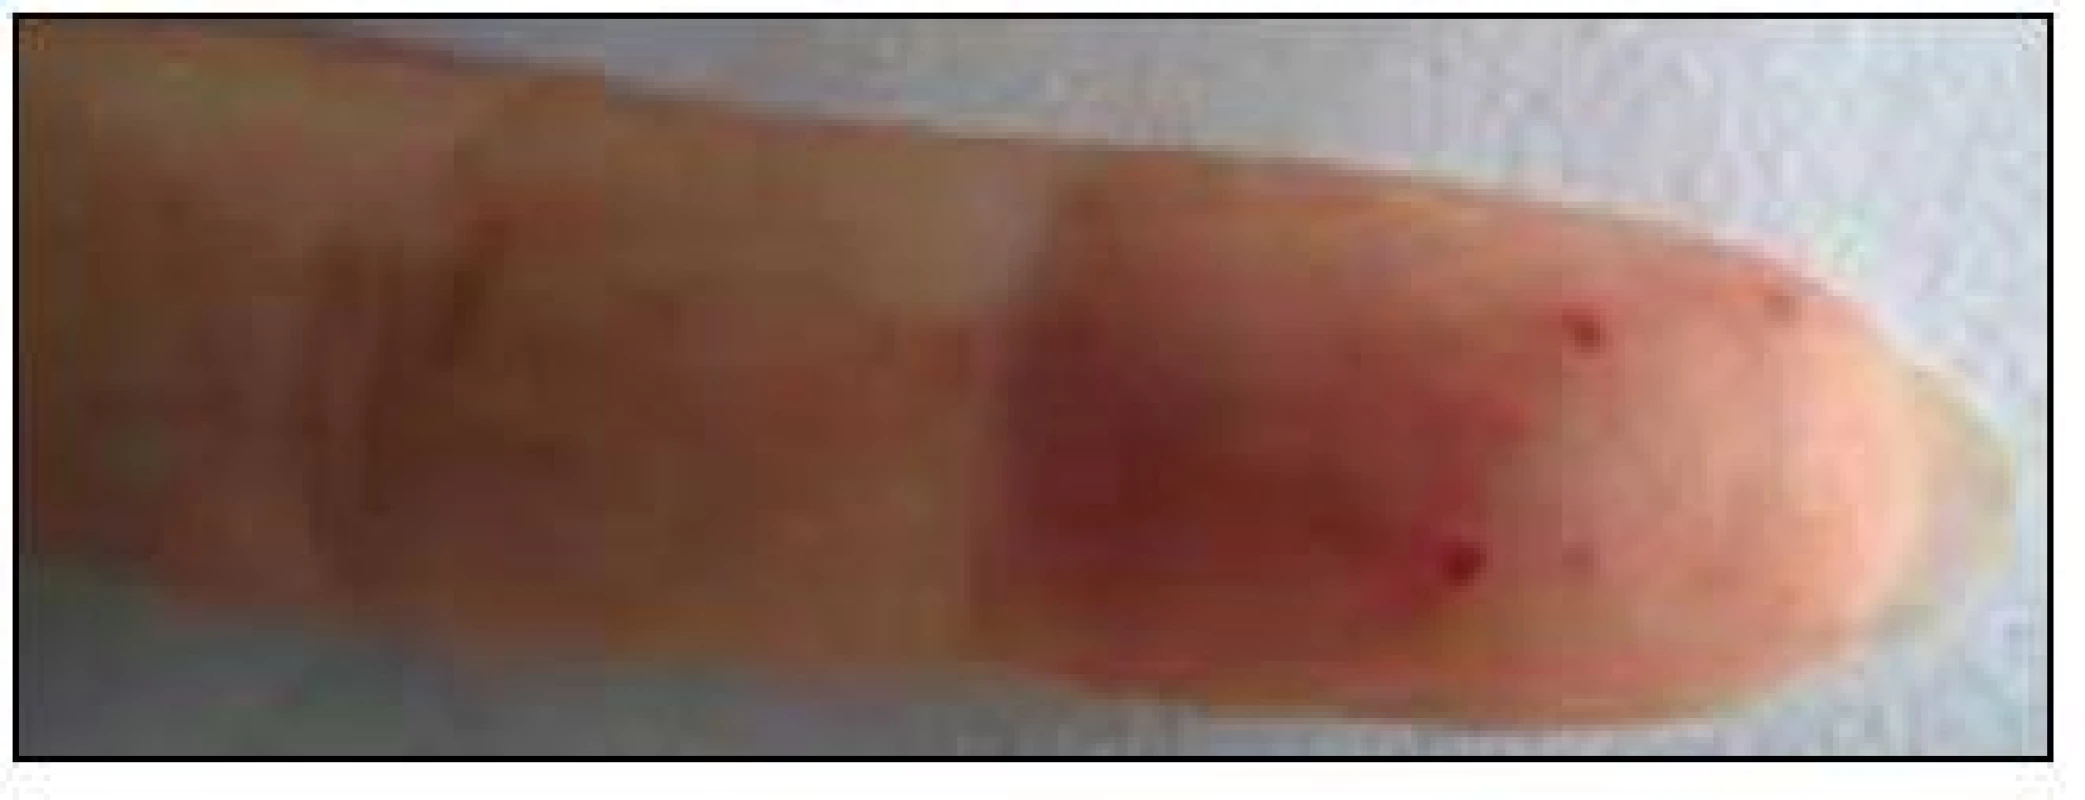 Prst pacienty s typickými kožními teleangiektaziemi.